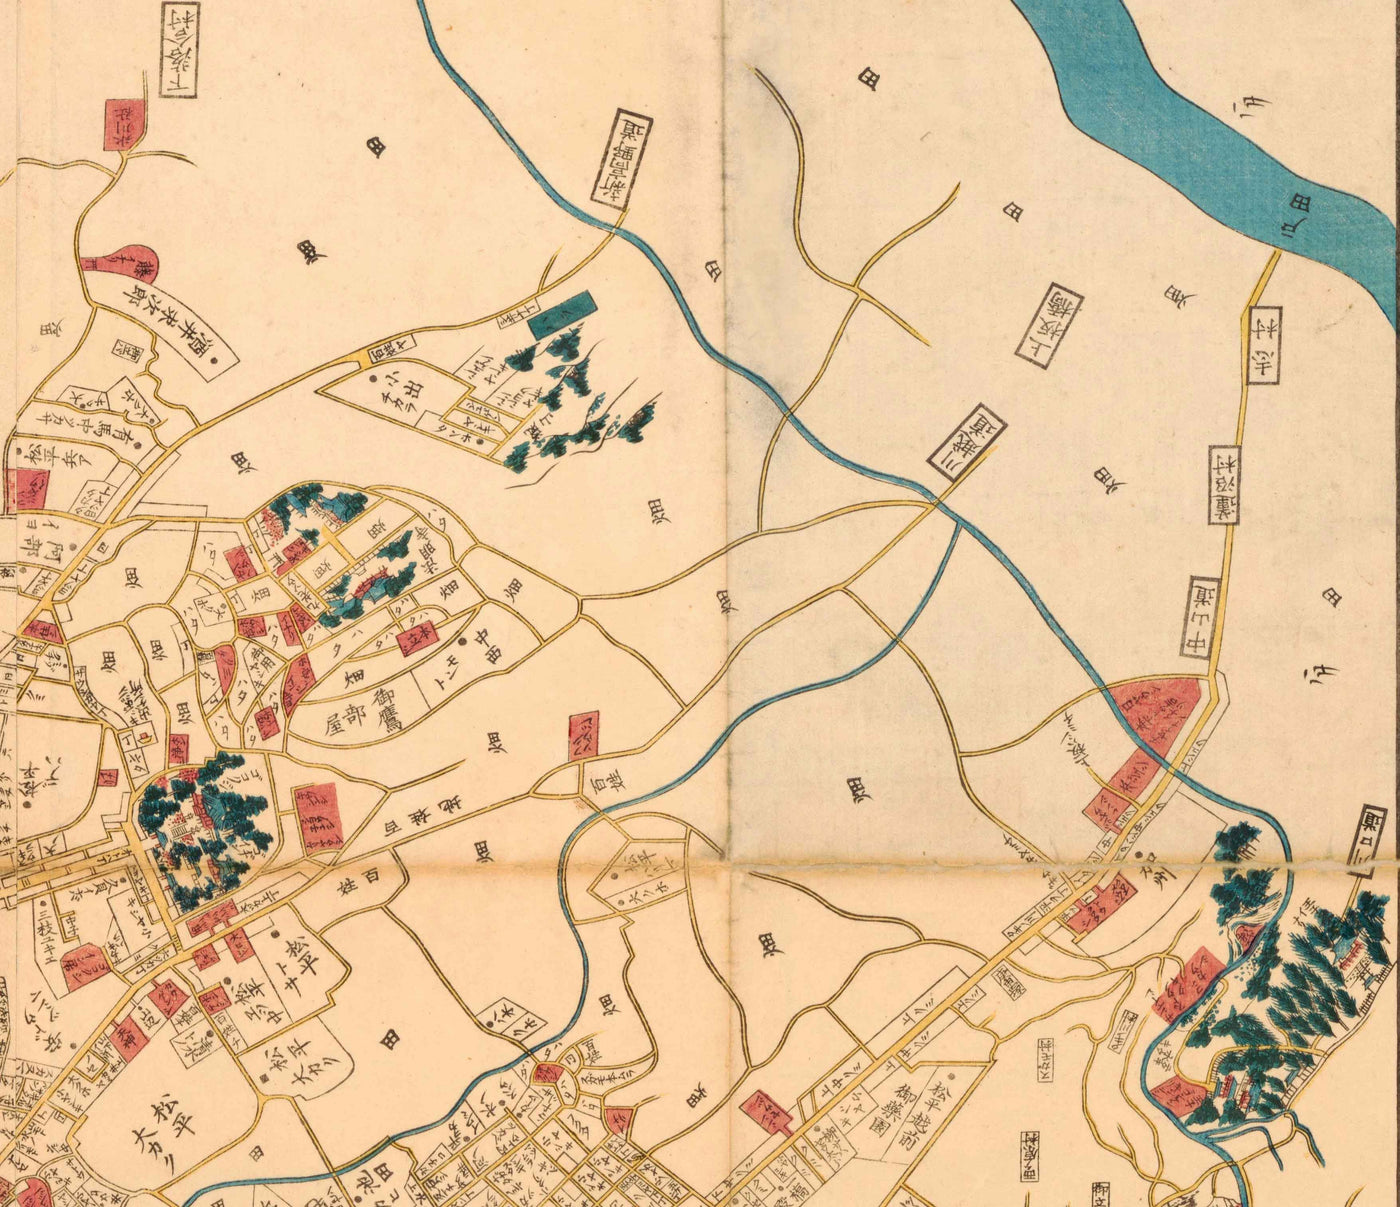 Old Map of Tokyo in 1860 by Mohe Subaraya - Yokohama, Kawasaki, Chiba, Minato, Shinjuku